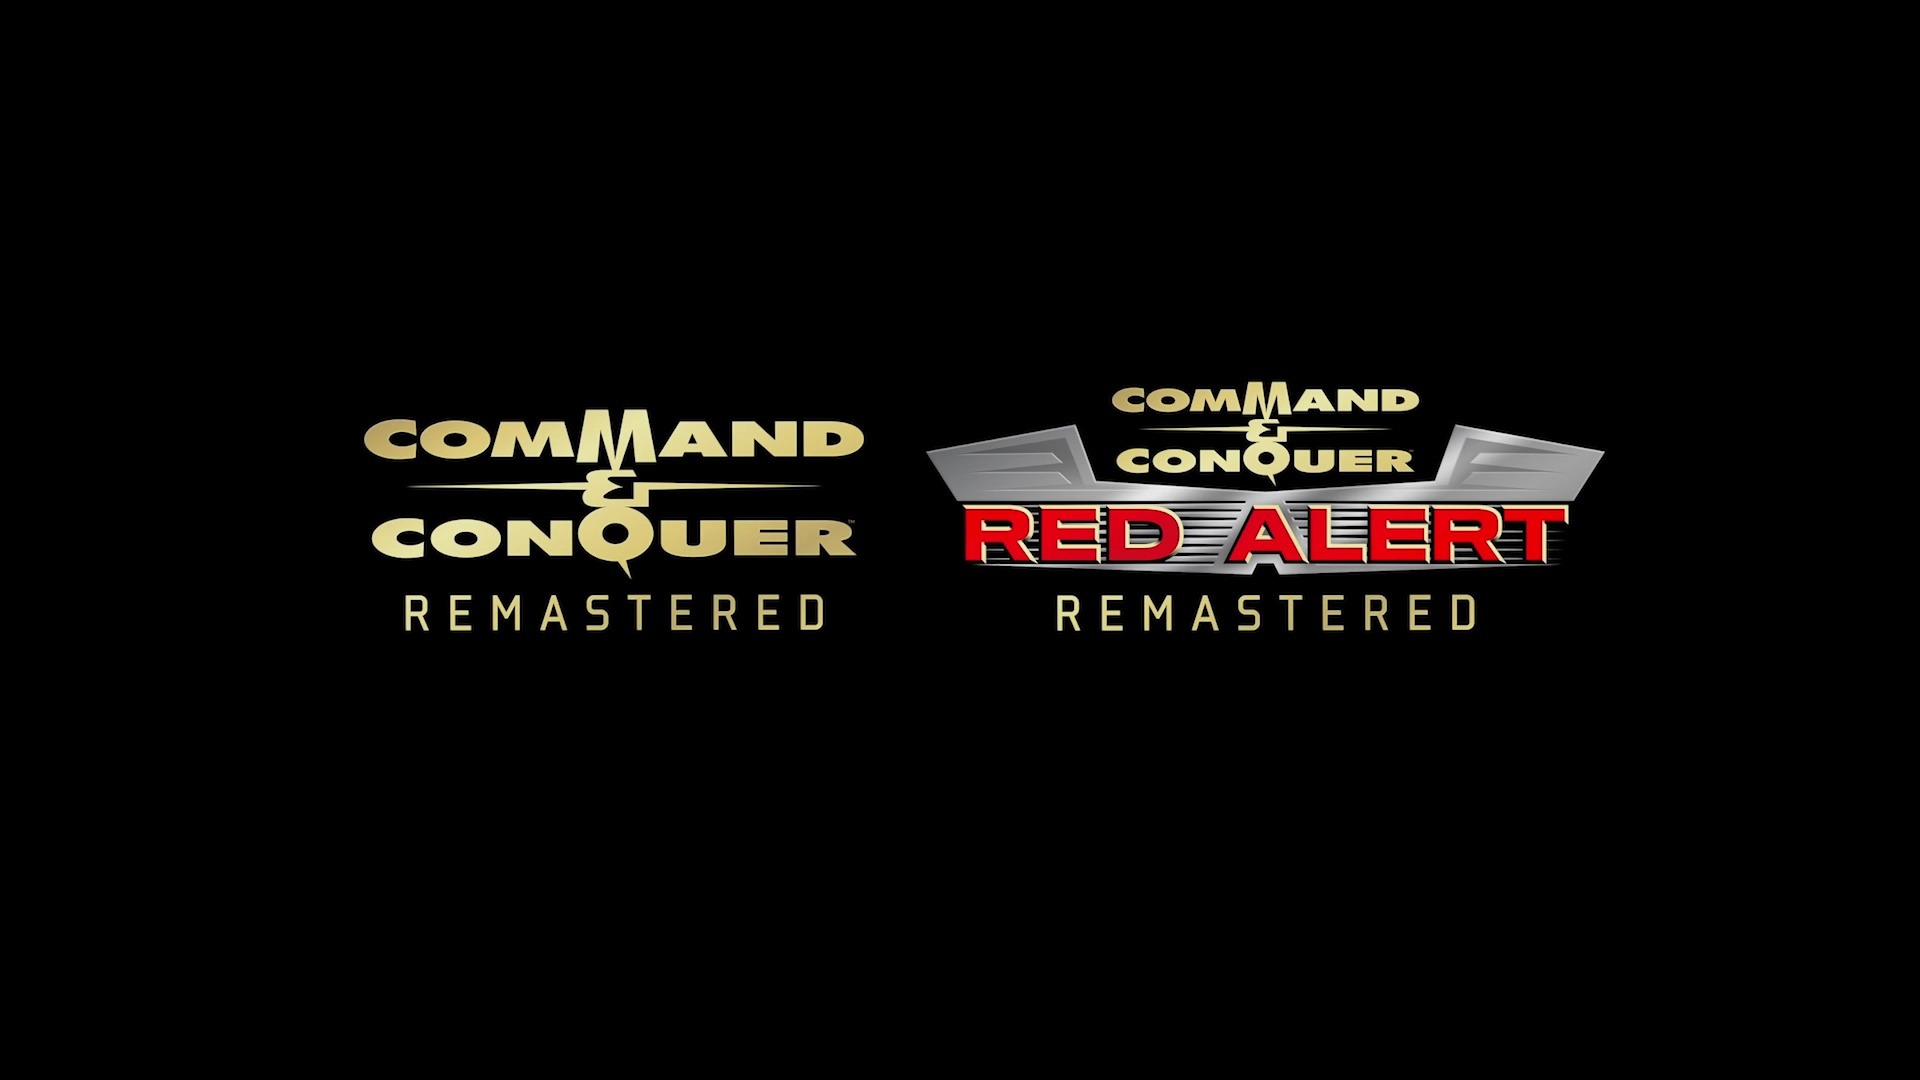 Ea Command Conquer リマスターを正式報告 Red Alert リマスターも同時進行中 Game Spark 国内 海外ゲーム情報サイト